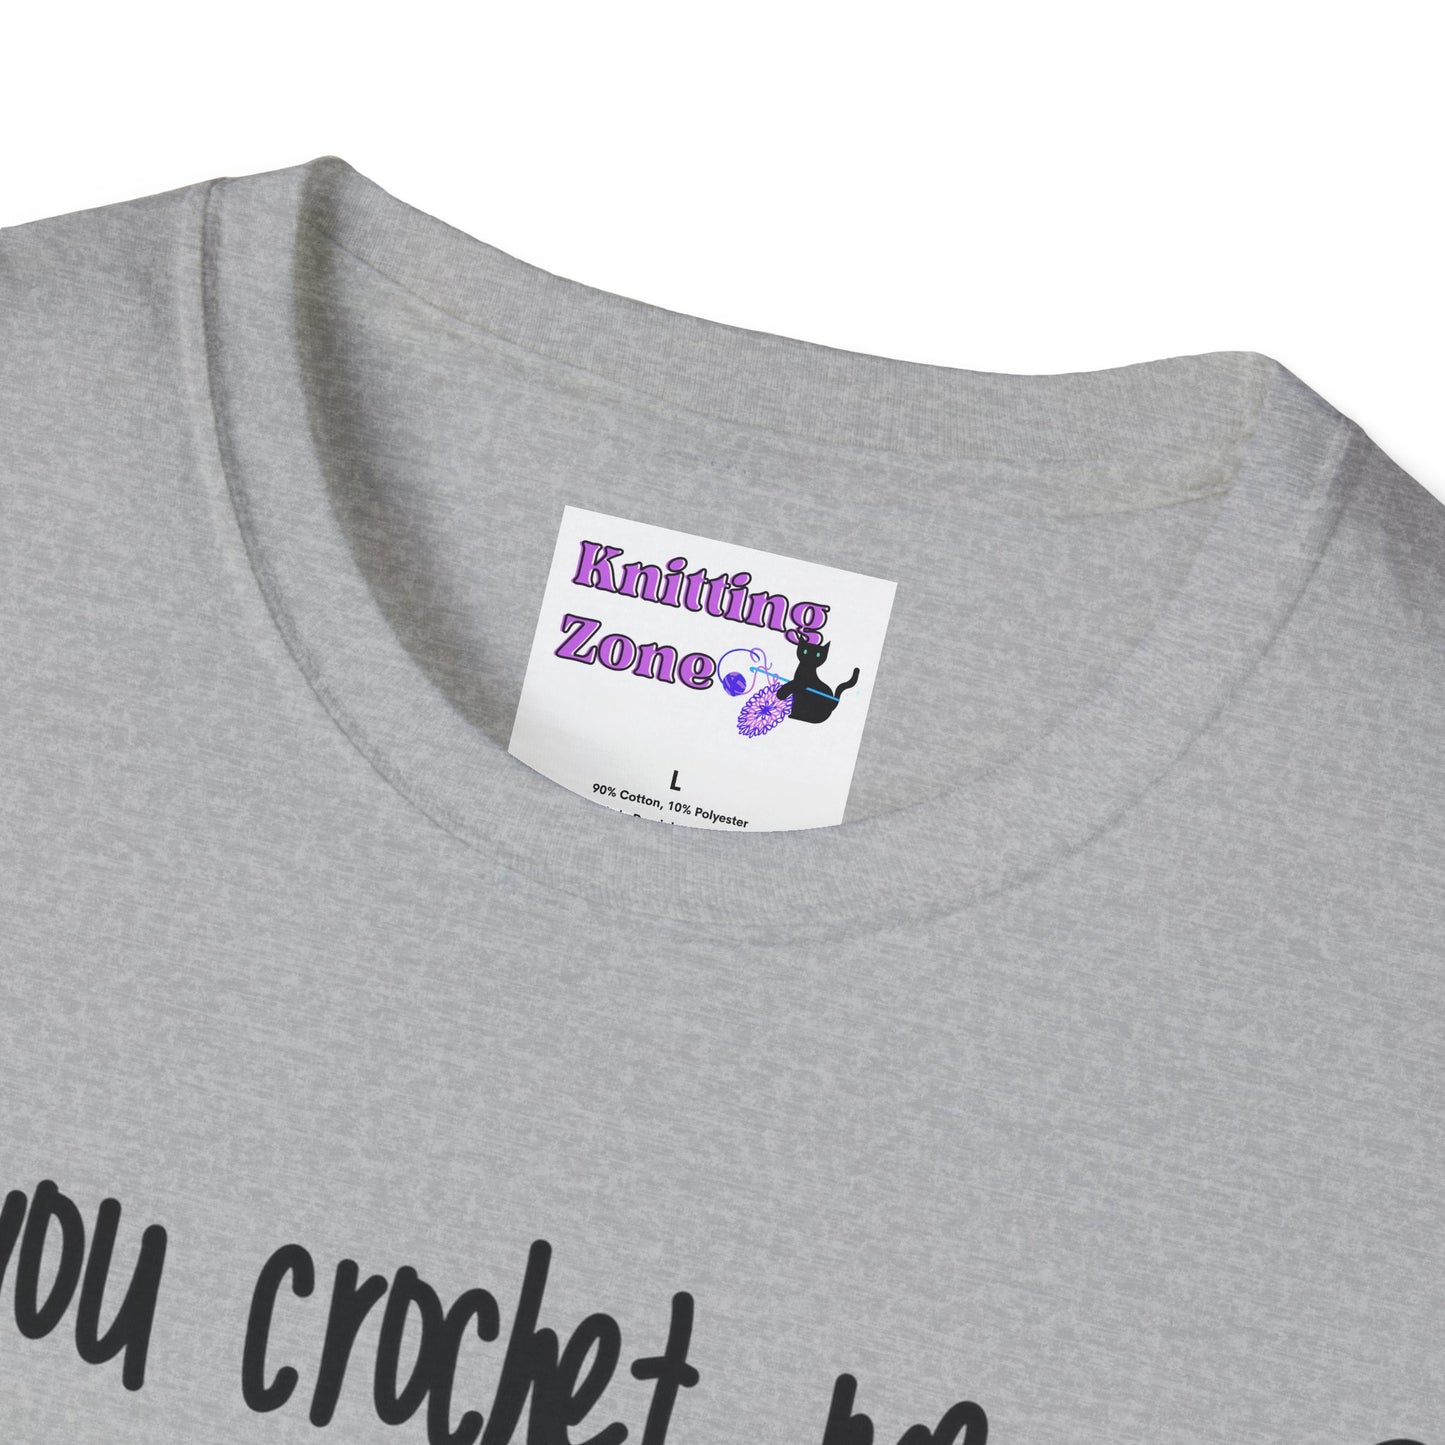 Can you Crochet me a Unisex T Shirt